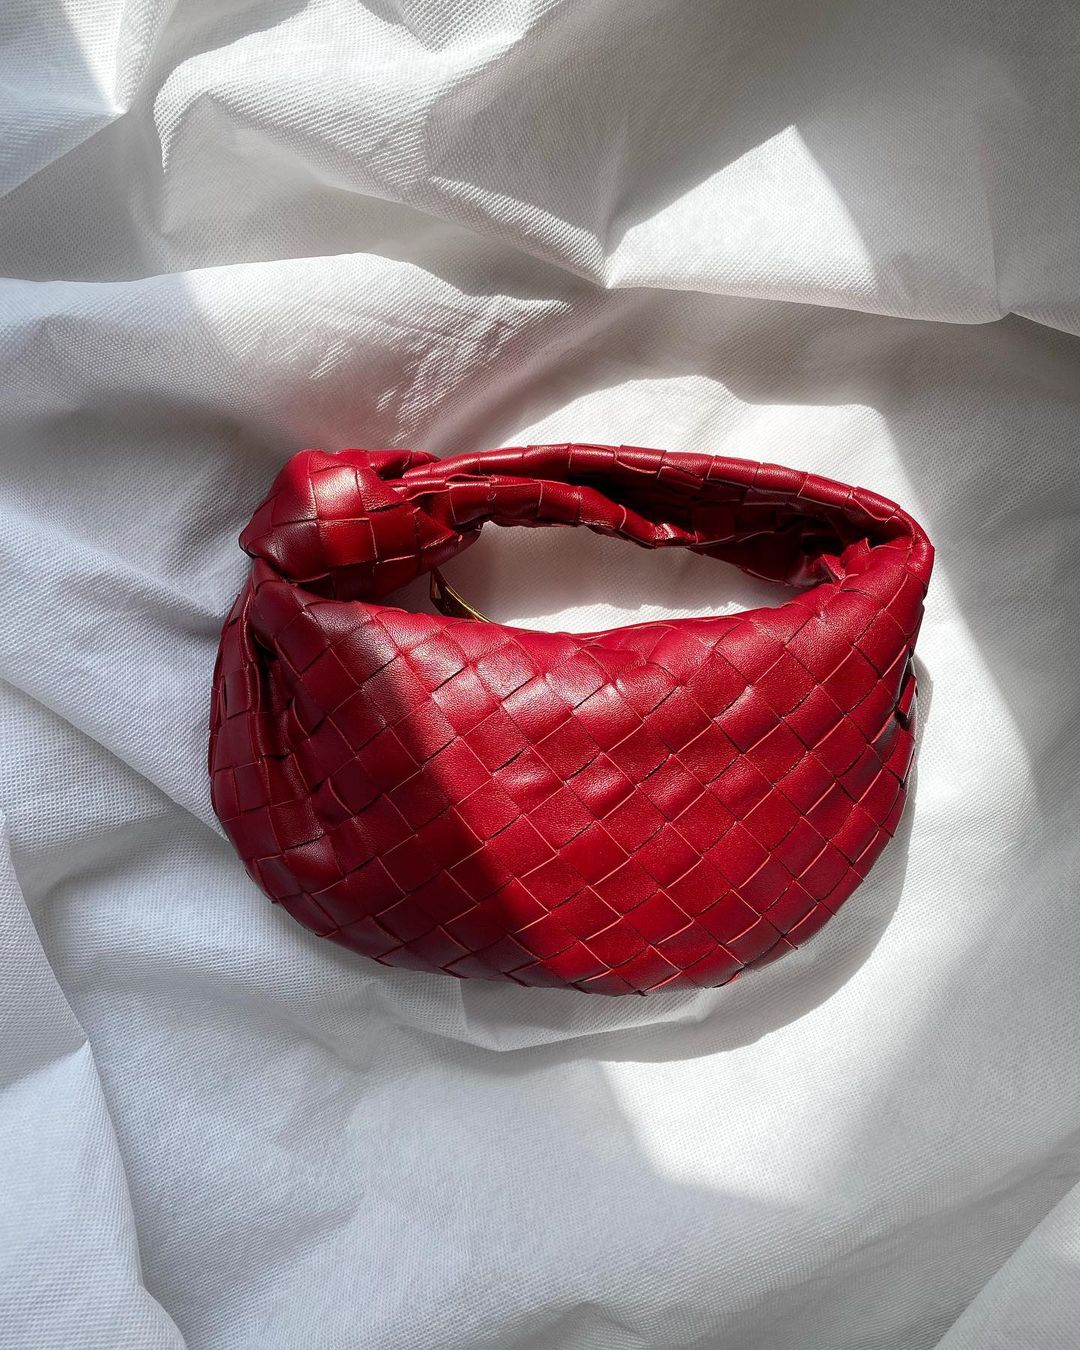 The Best Bottega Veneta Handbags (and Their Histories) to Shop